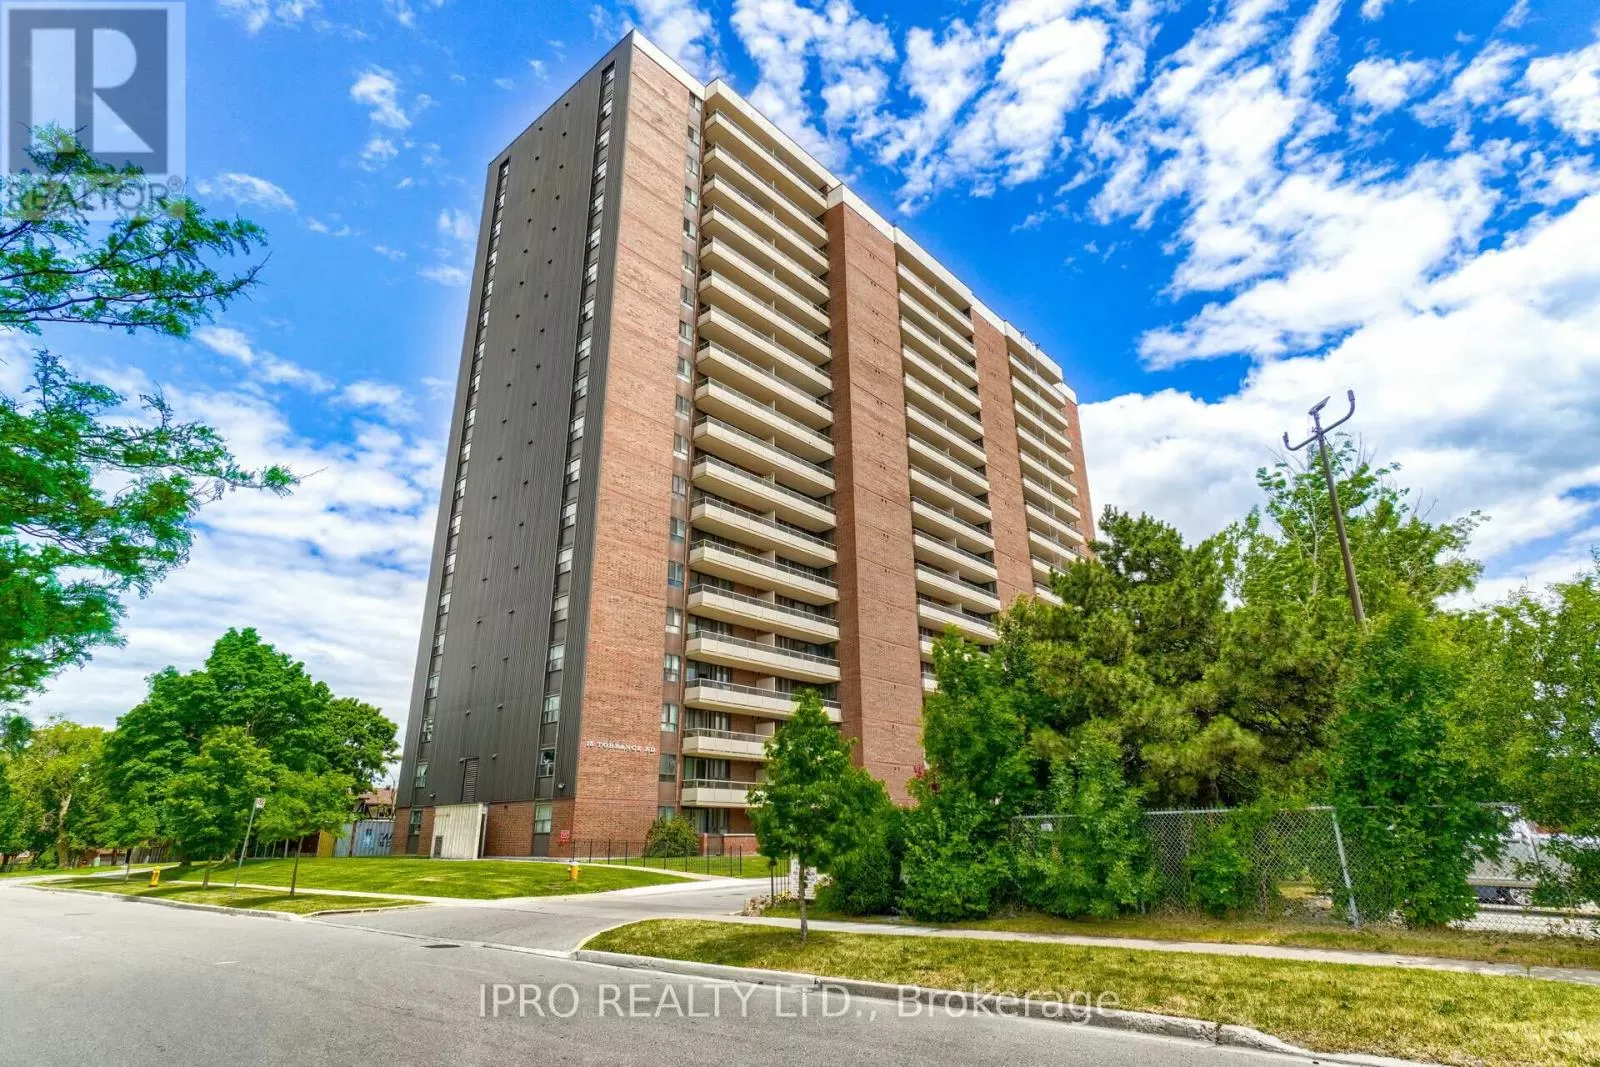 Apartment for rent: 1509 - 15 Torrance Road, Toronto, Ontario M1J 3K2